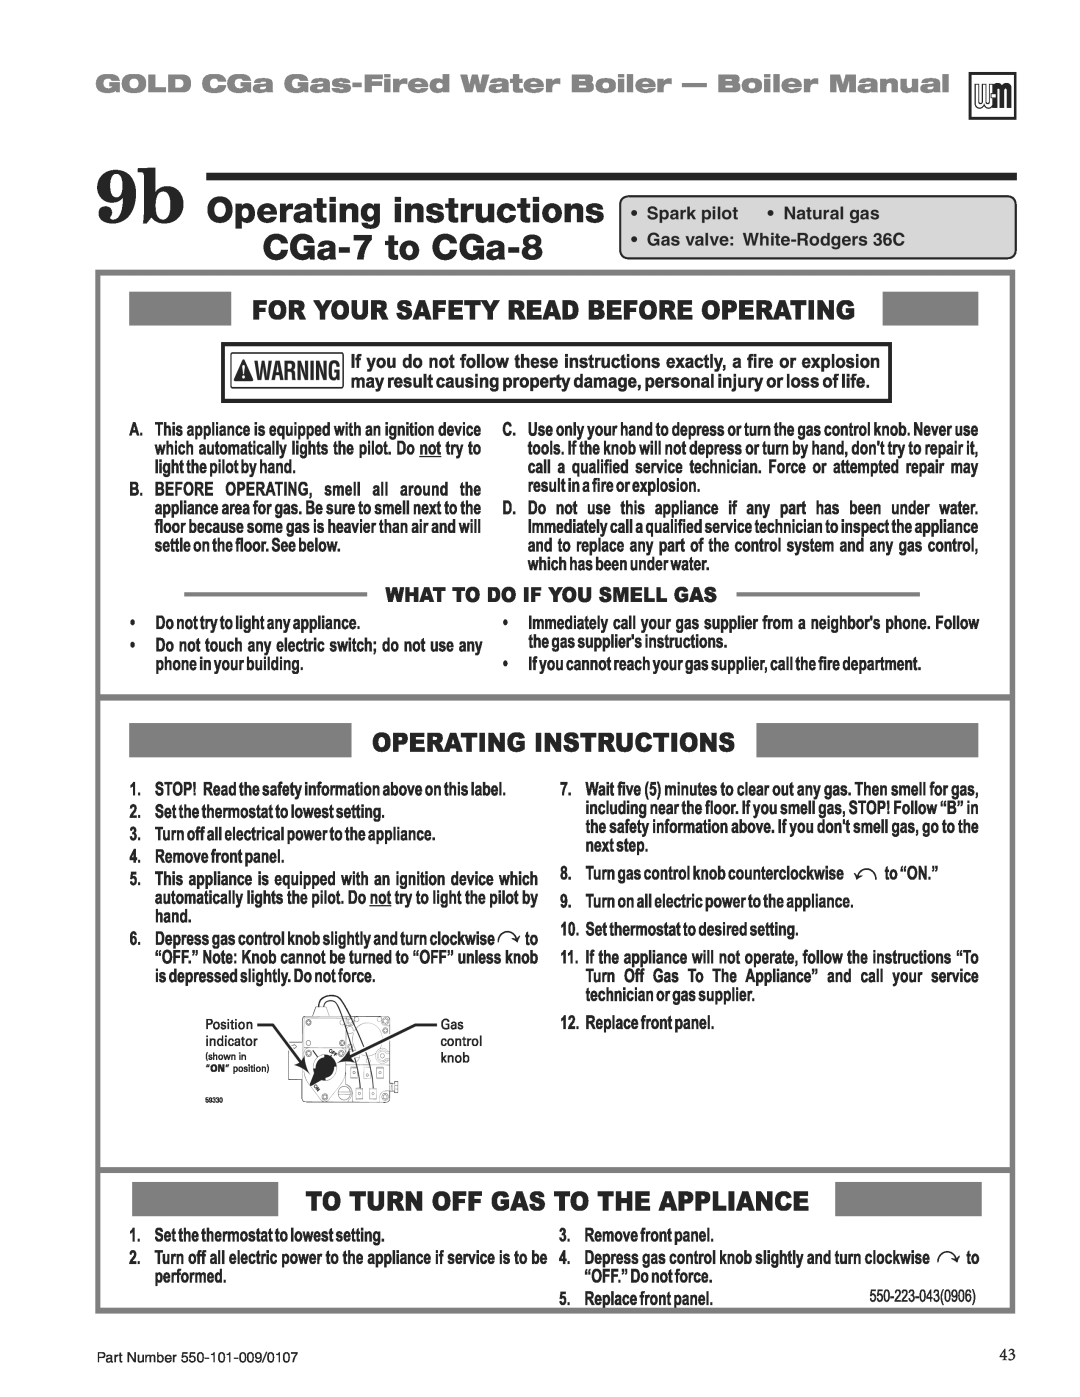 Weil-McLain CGA25SPDN manual 9b Operating instructions CGa-7to CGa-8, GOLD CGa Gas-FiredWater Boiler - Boiler Manual 